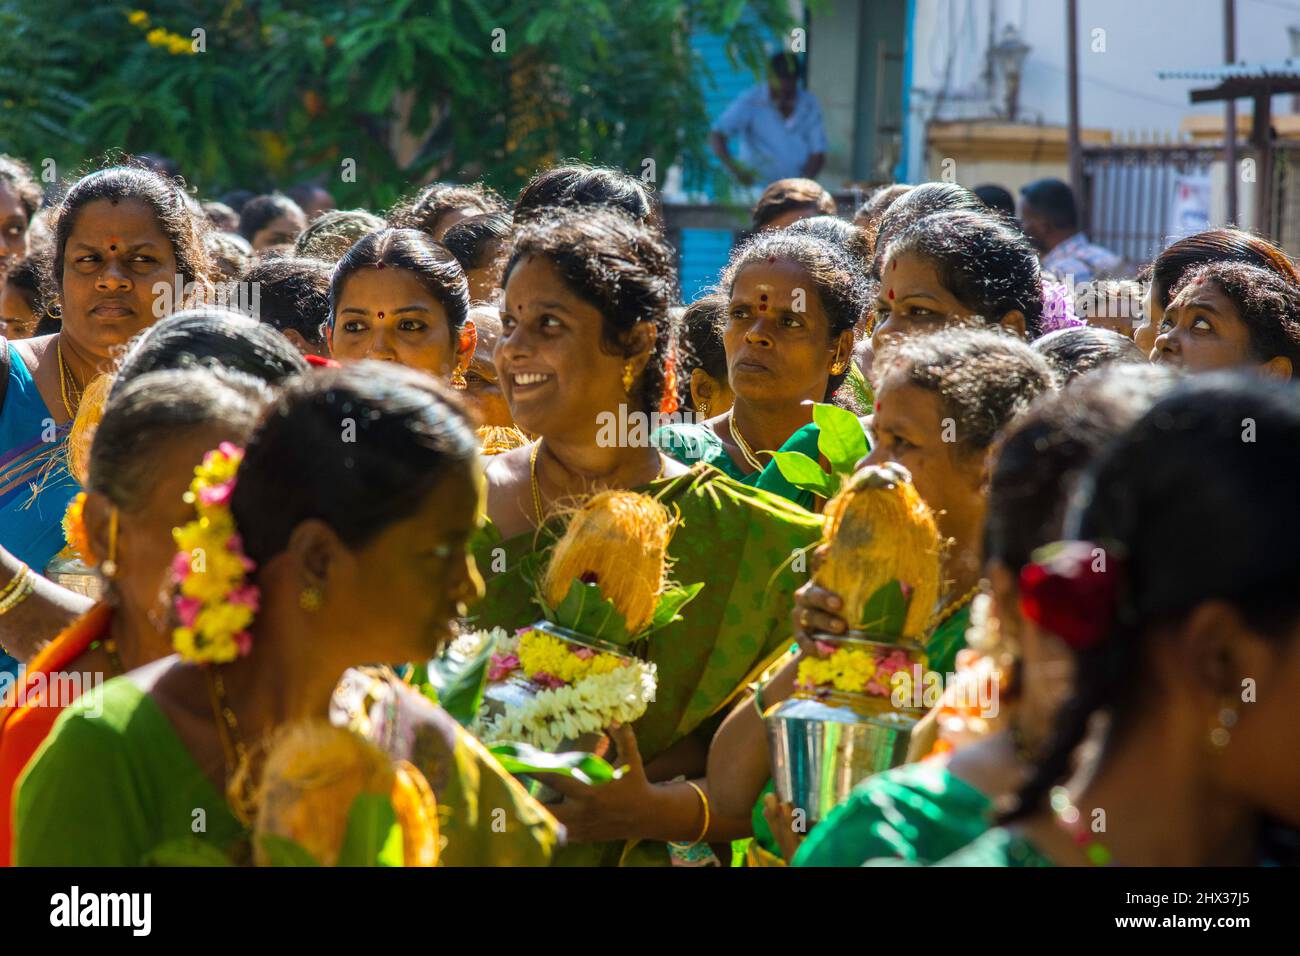 A religious festival in India Stock Photo